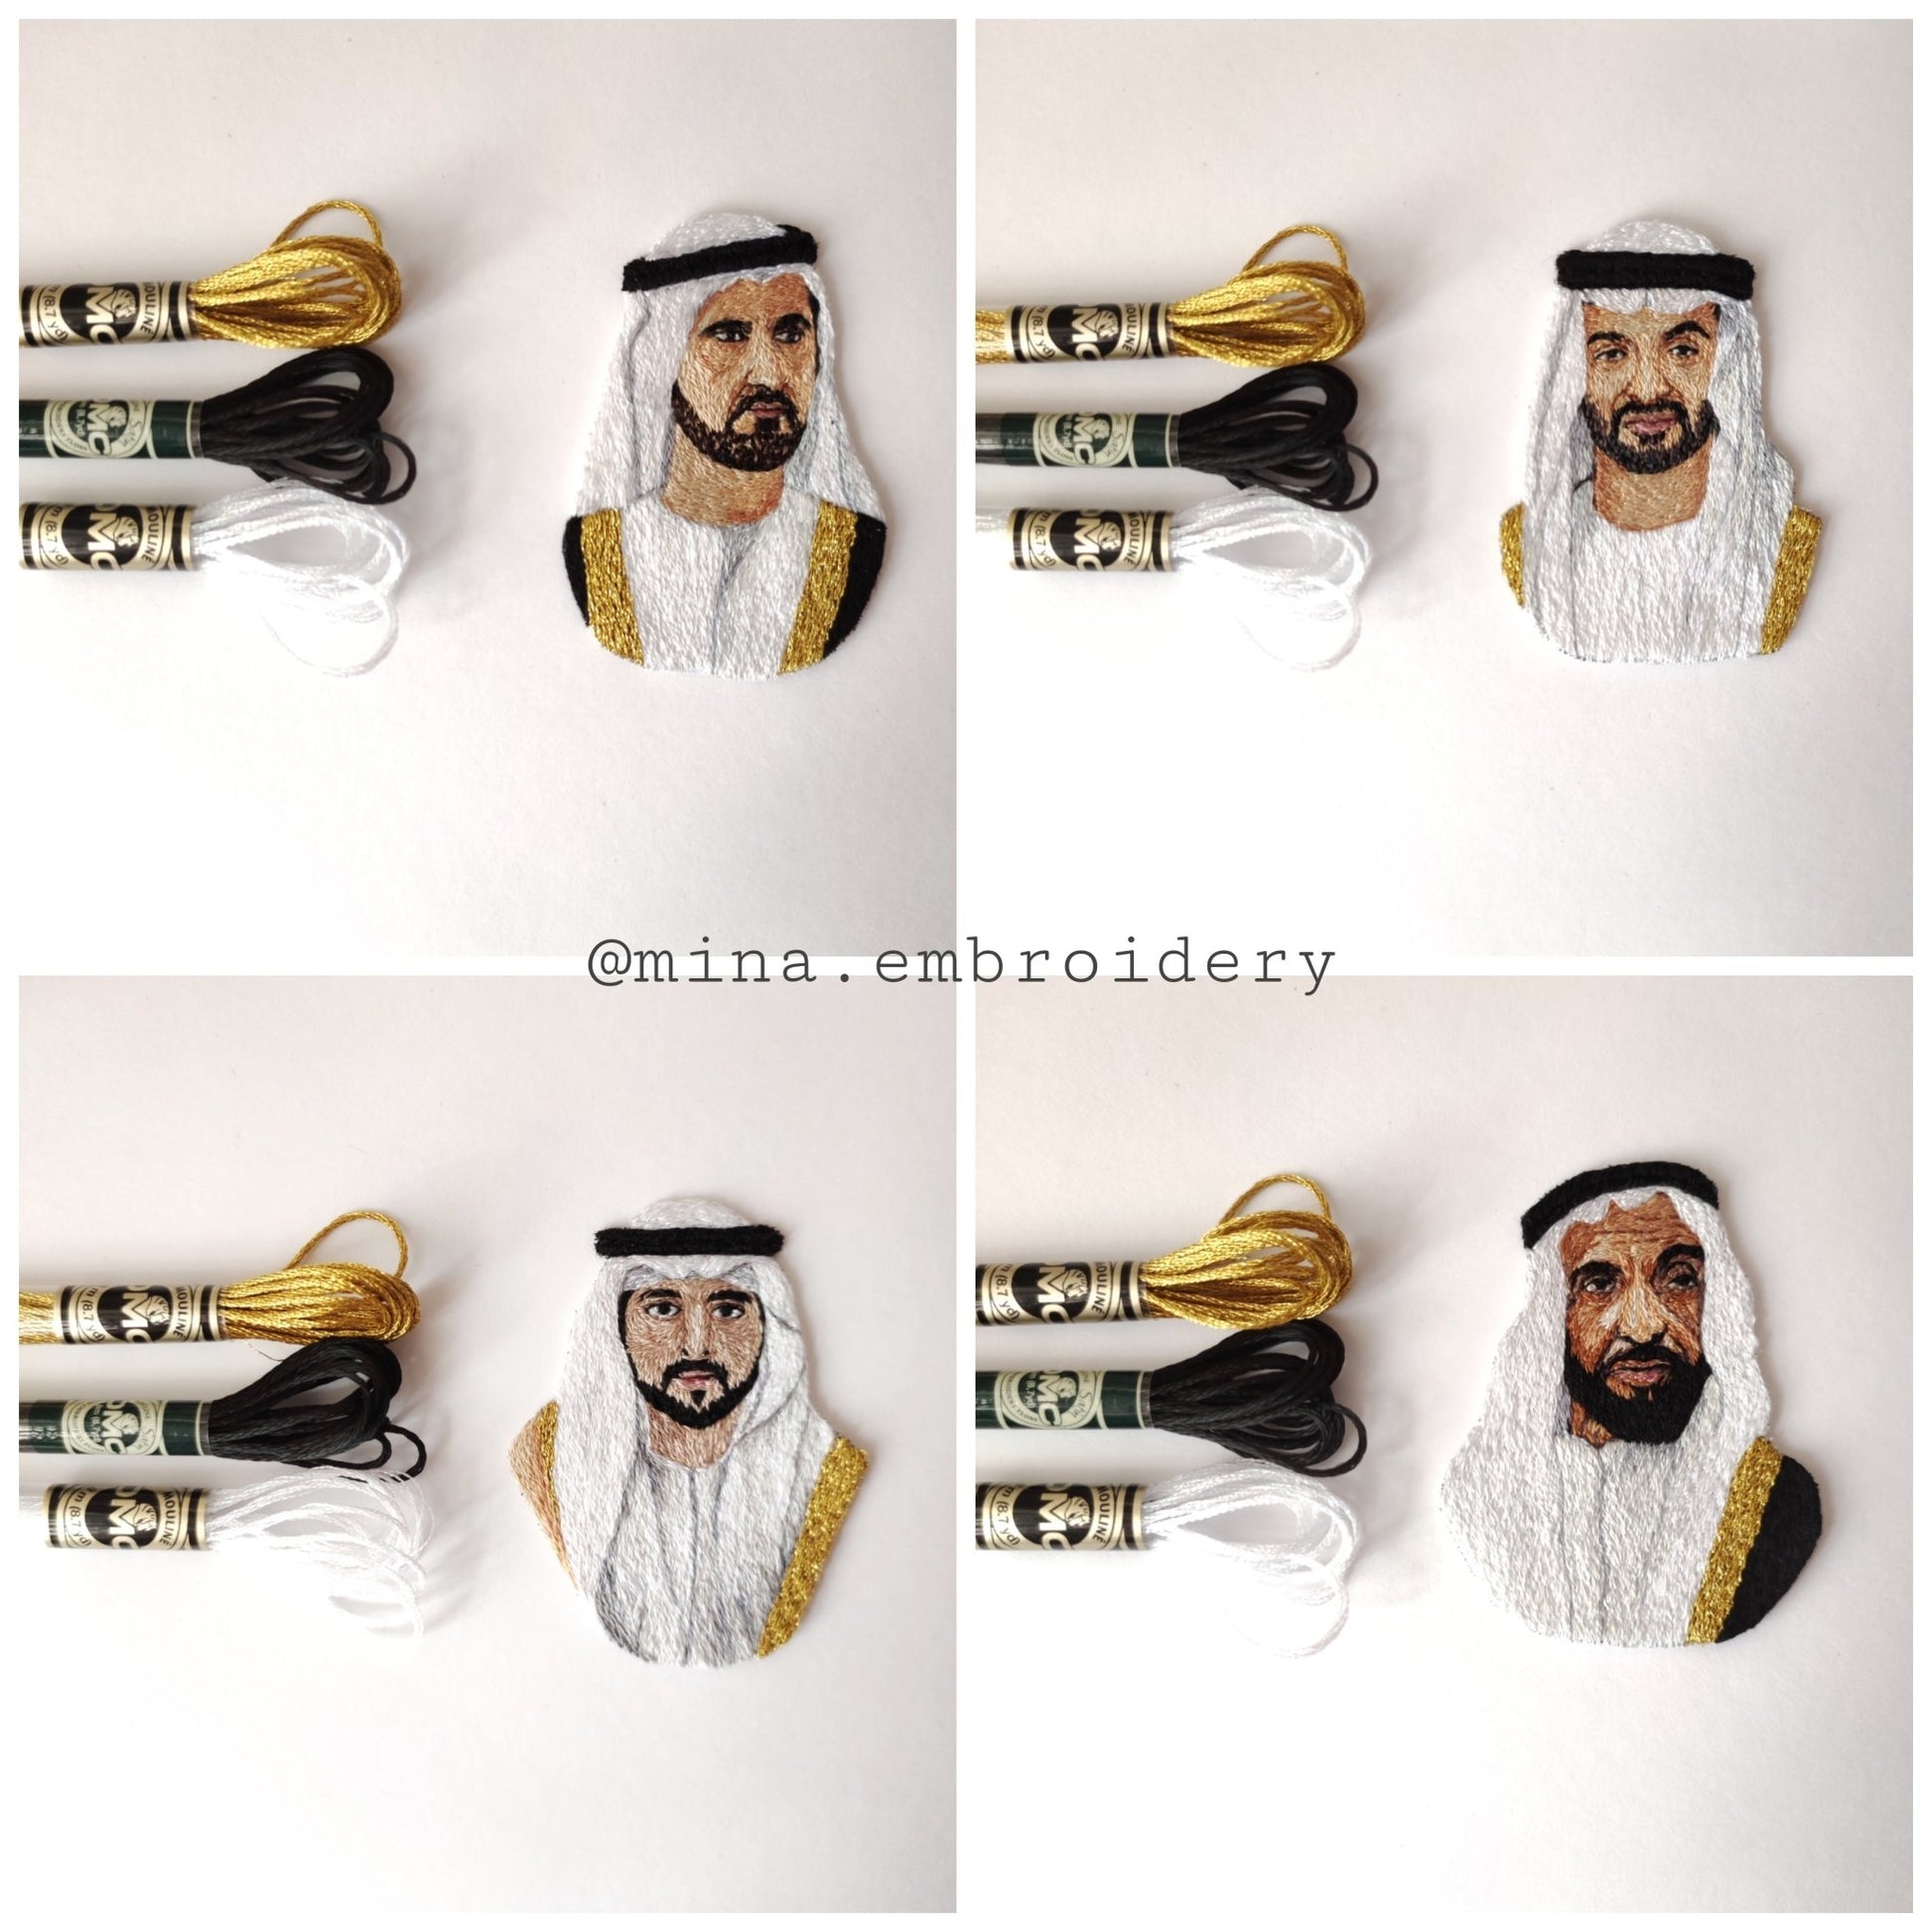 his-highness-sheikh-mohamed-bin-zayed-al-nahyan